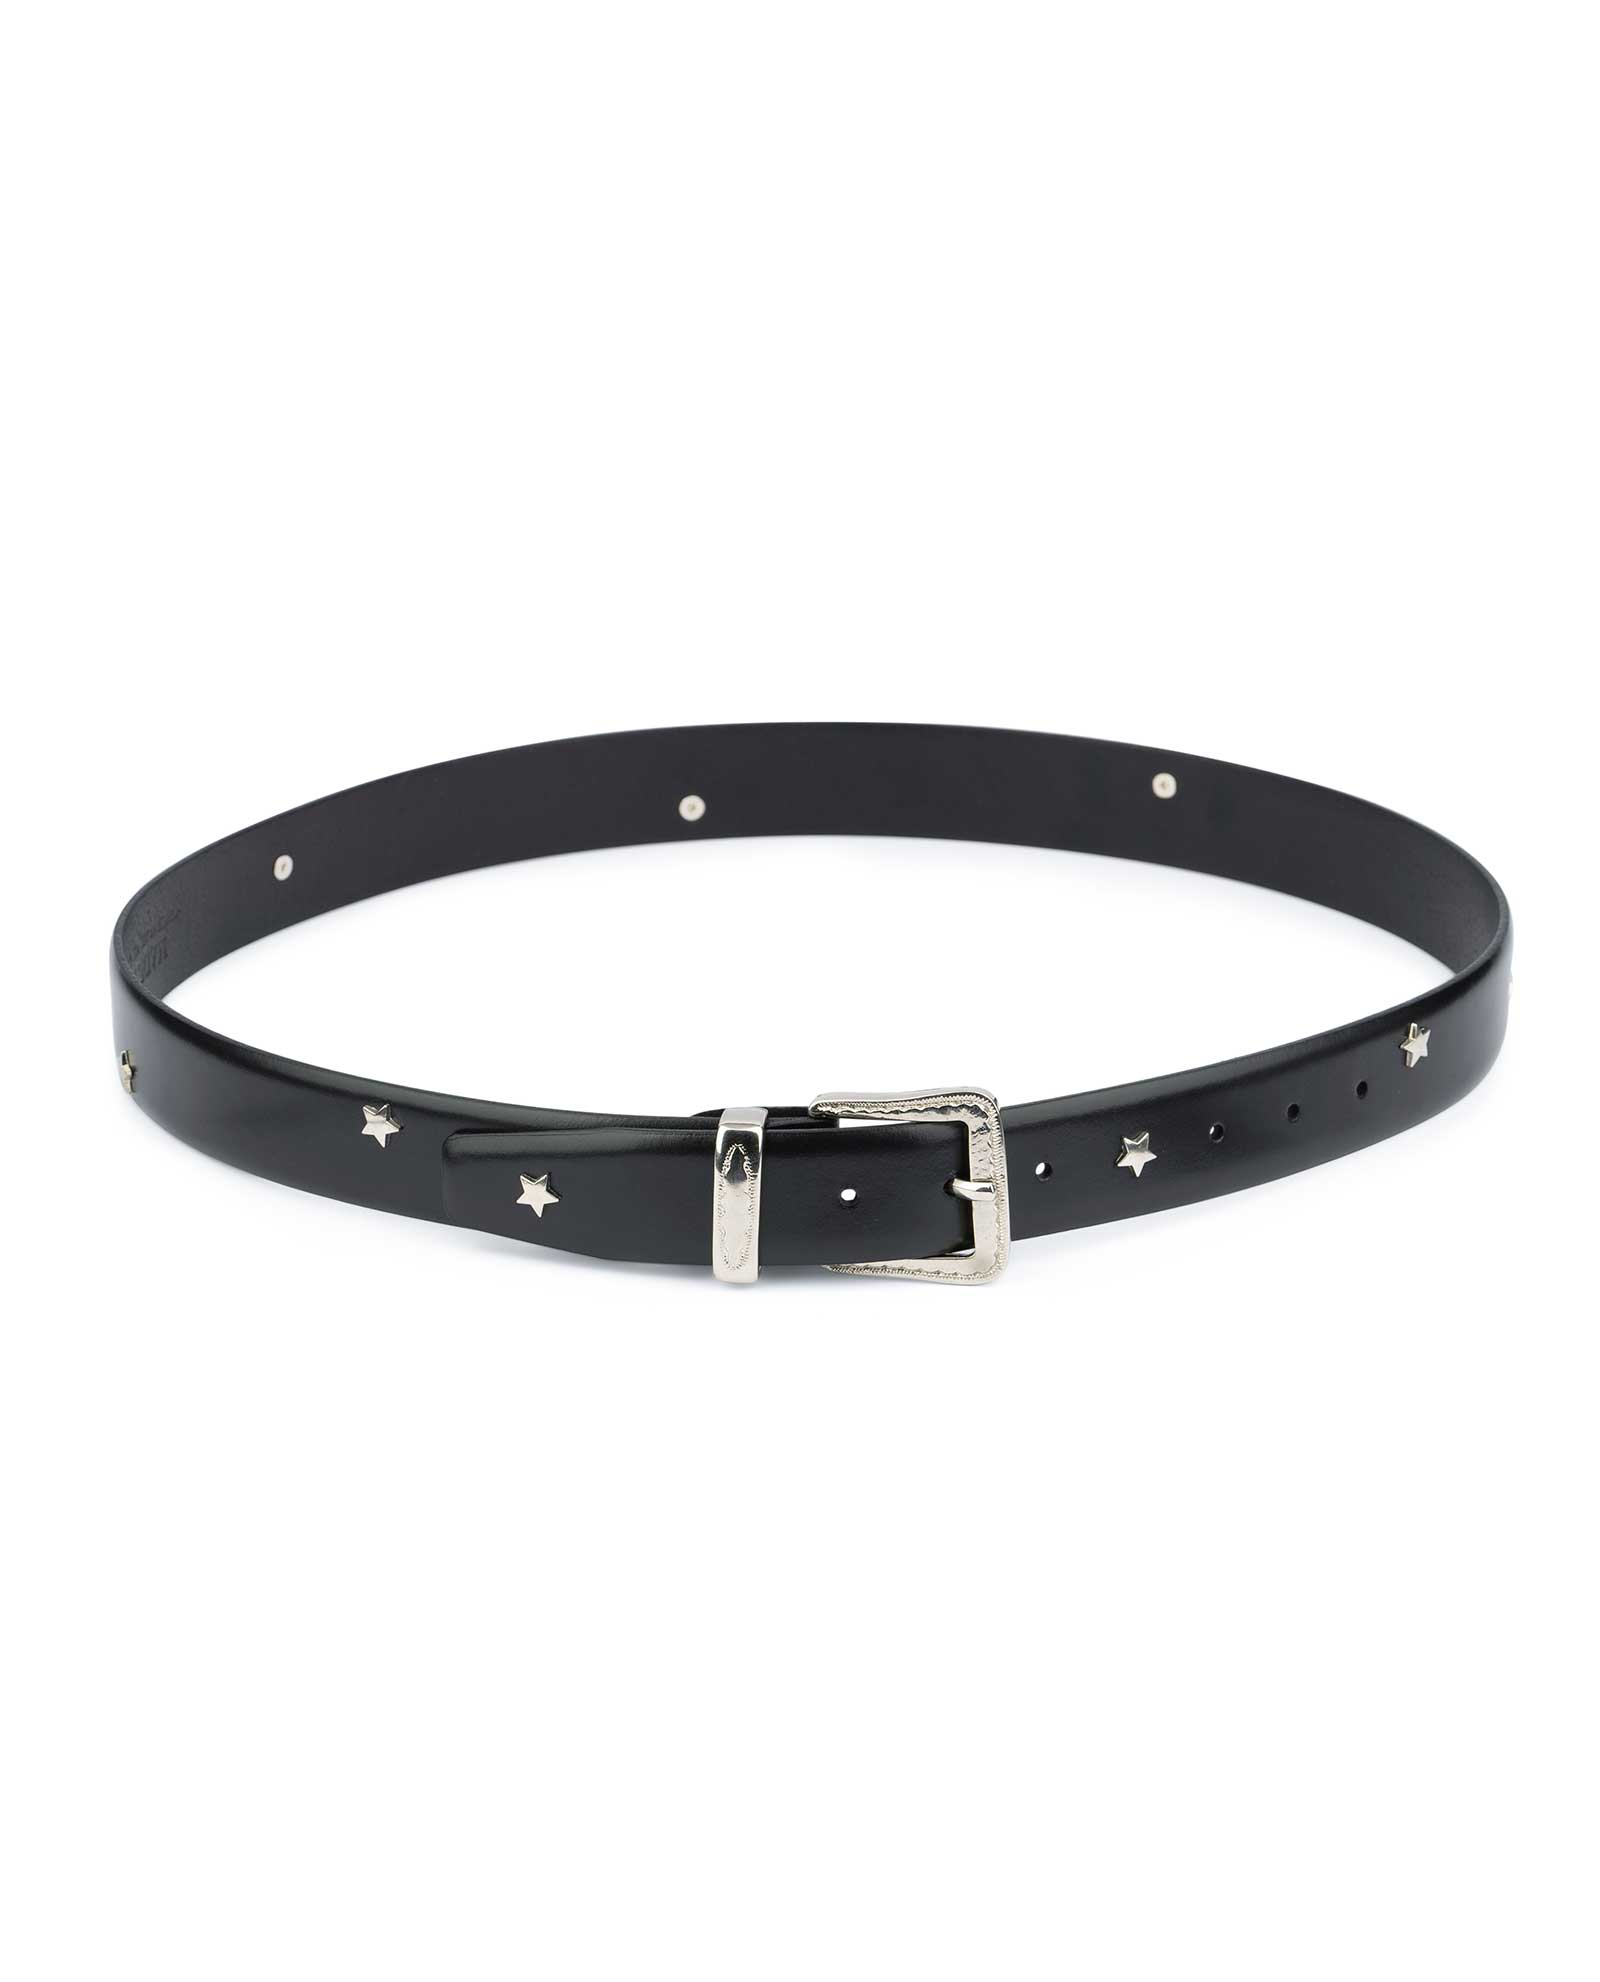 Buy Studded Star Belt | Black Leather | LeatherBeltsOnline.com